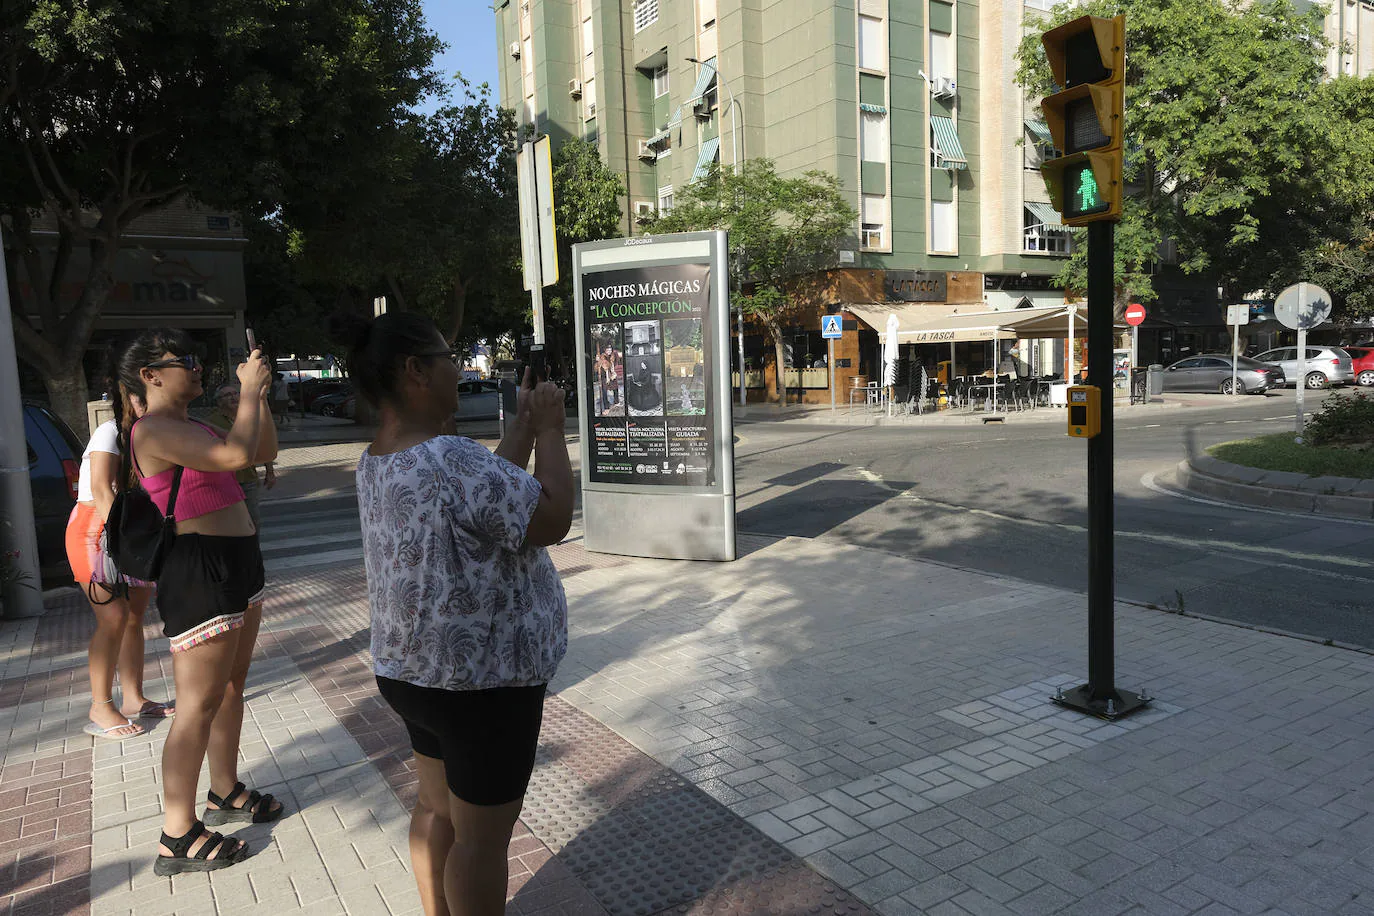 The traffic light in honor of Chiquito de la Calzada, on Tomás Echeverría street in Malaga